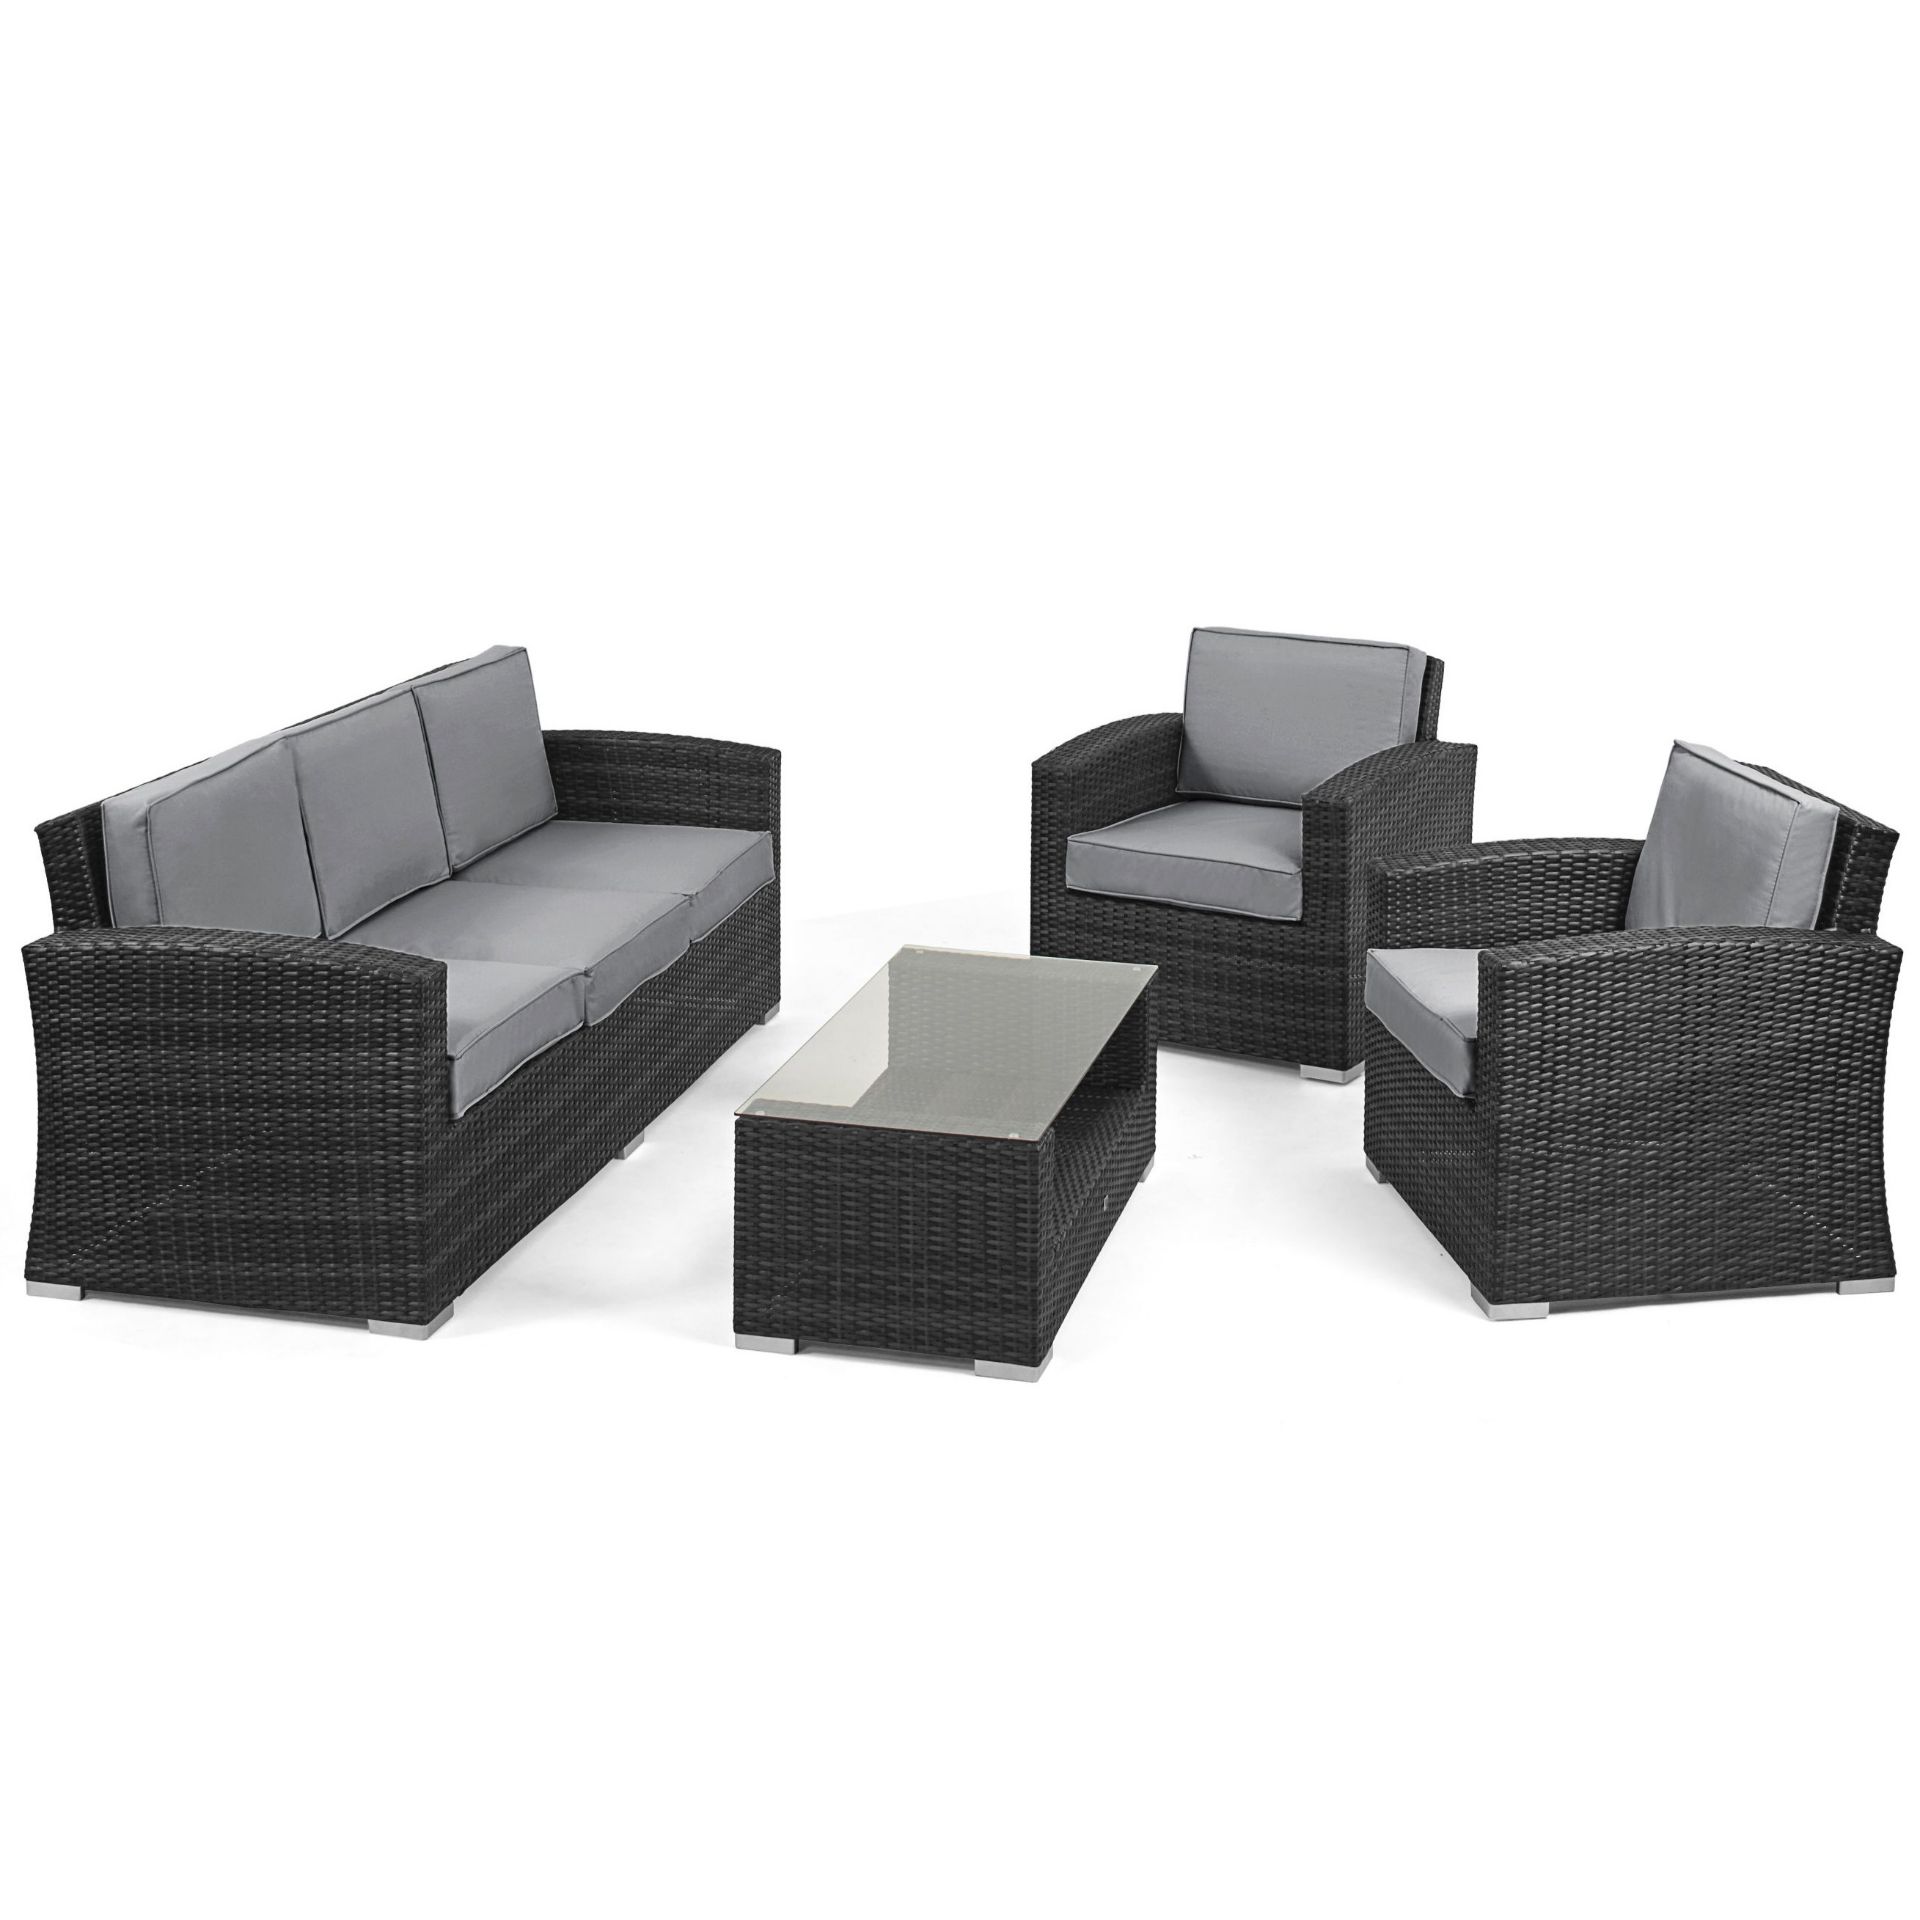 Rattan Kingston 3 Seat Outdoor Sofa Set (Grey) *BRAND NEW* - Image 3 of 4